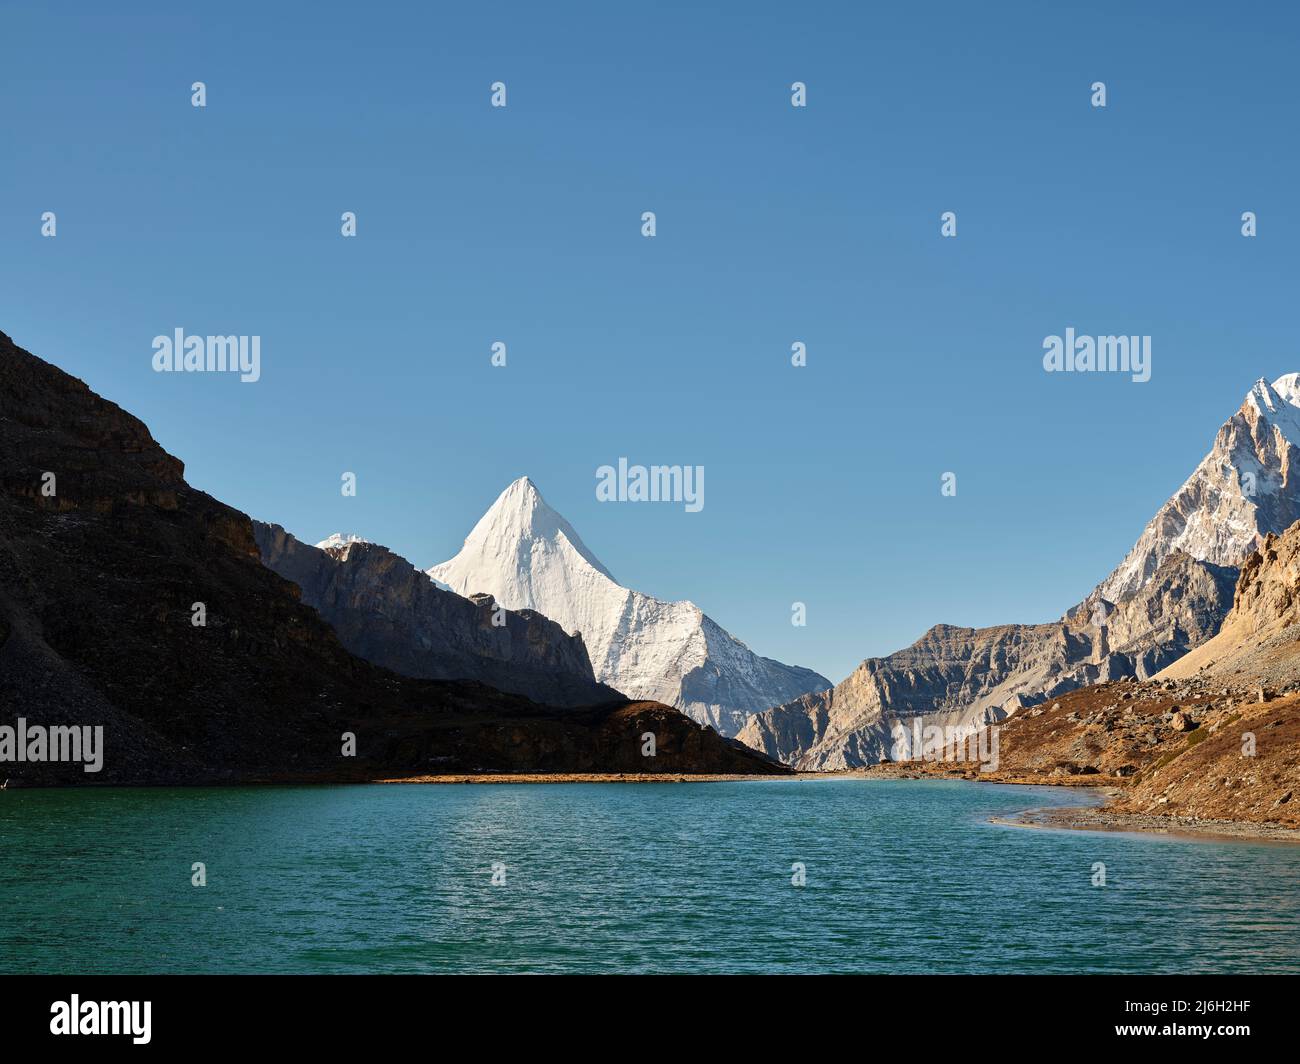 monte yangmaiyong (o jampayang en lengua tibetana) y lago boyongcuo bajo el cielo azul en yading, condado de daocheng, provincia de sichuan, china Foto de stock